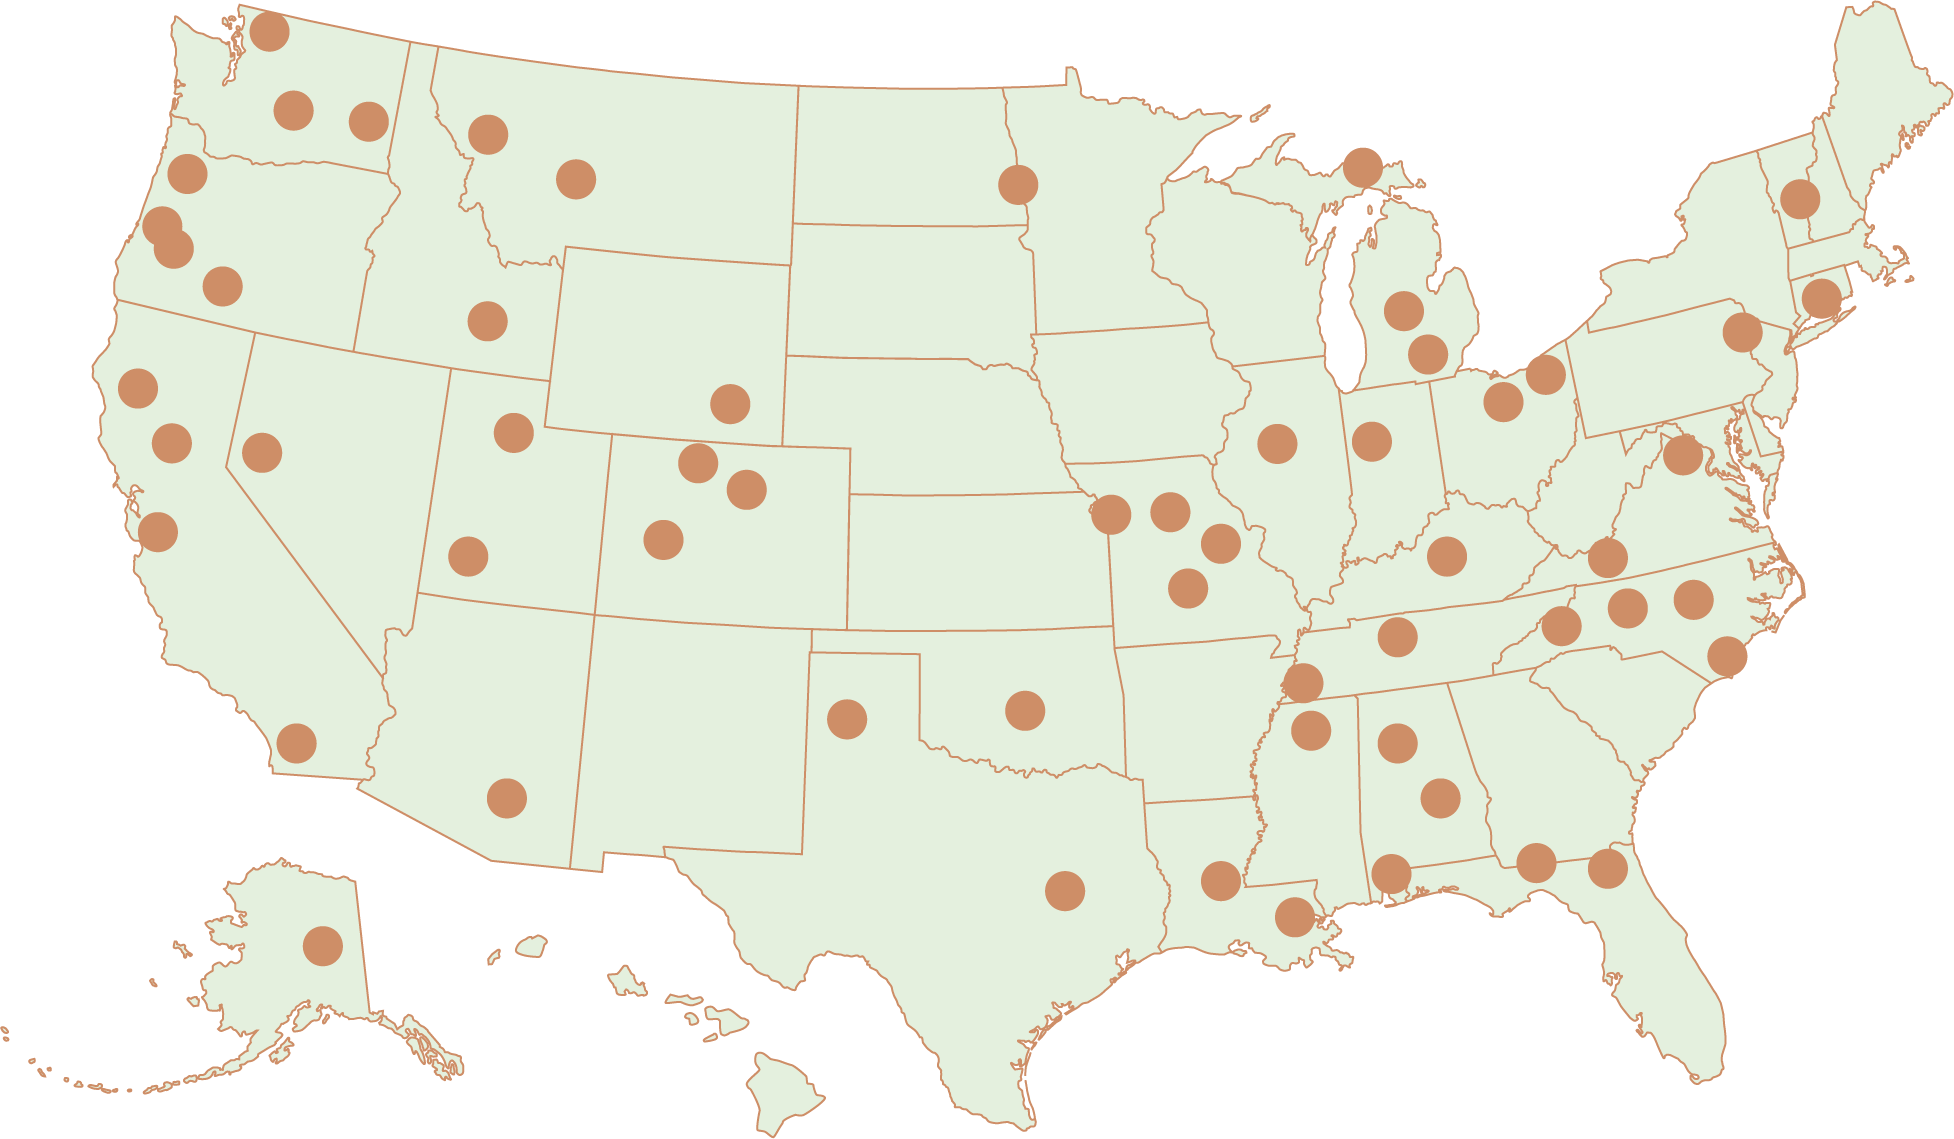 Large dots represent participating universities.